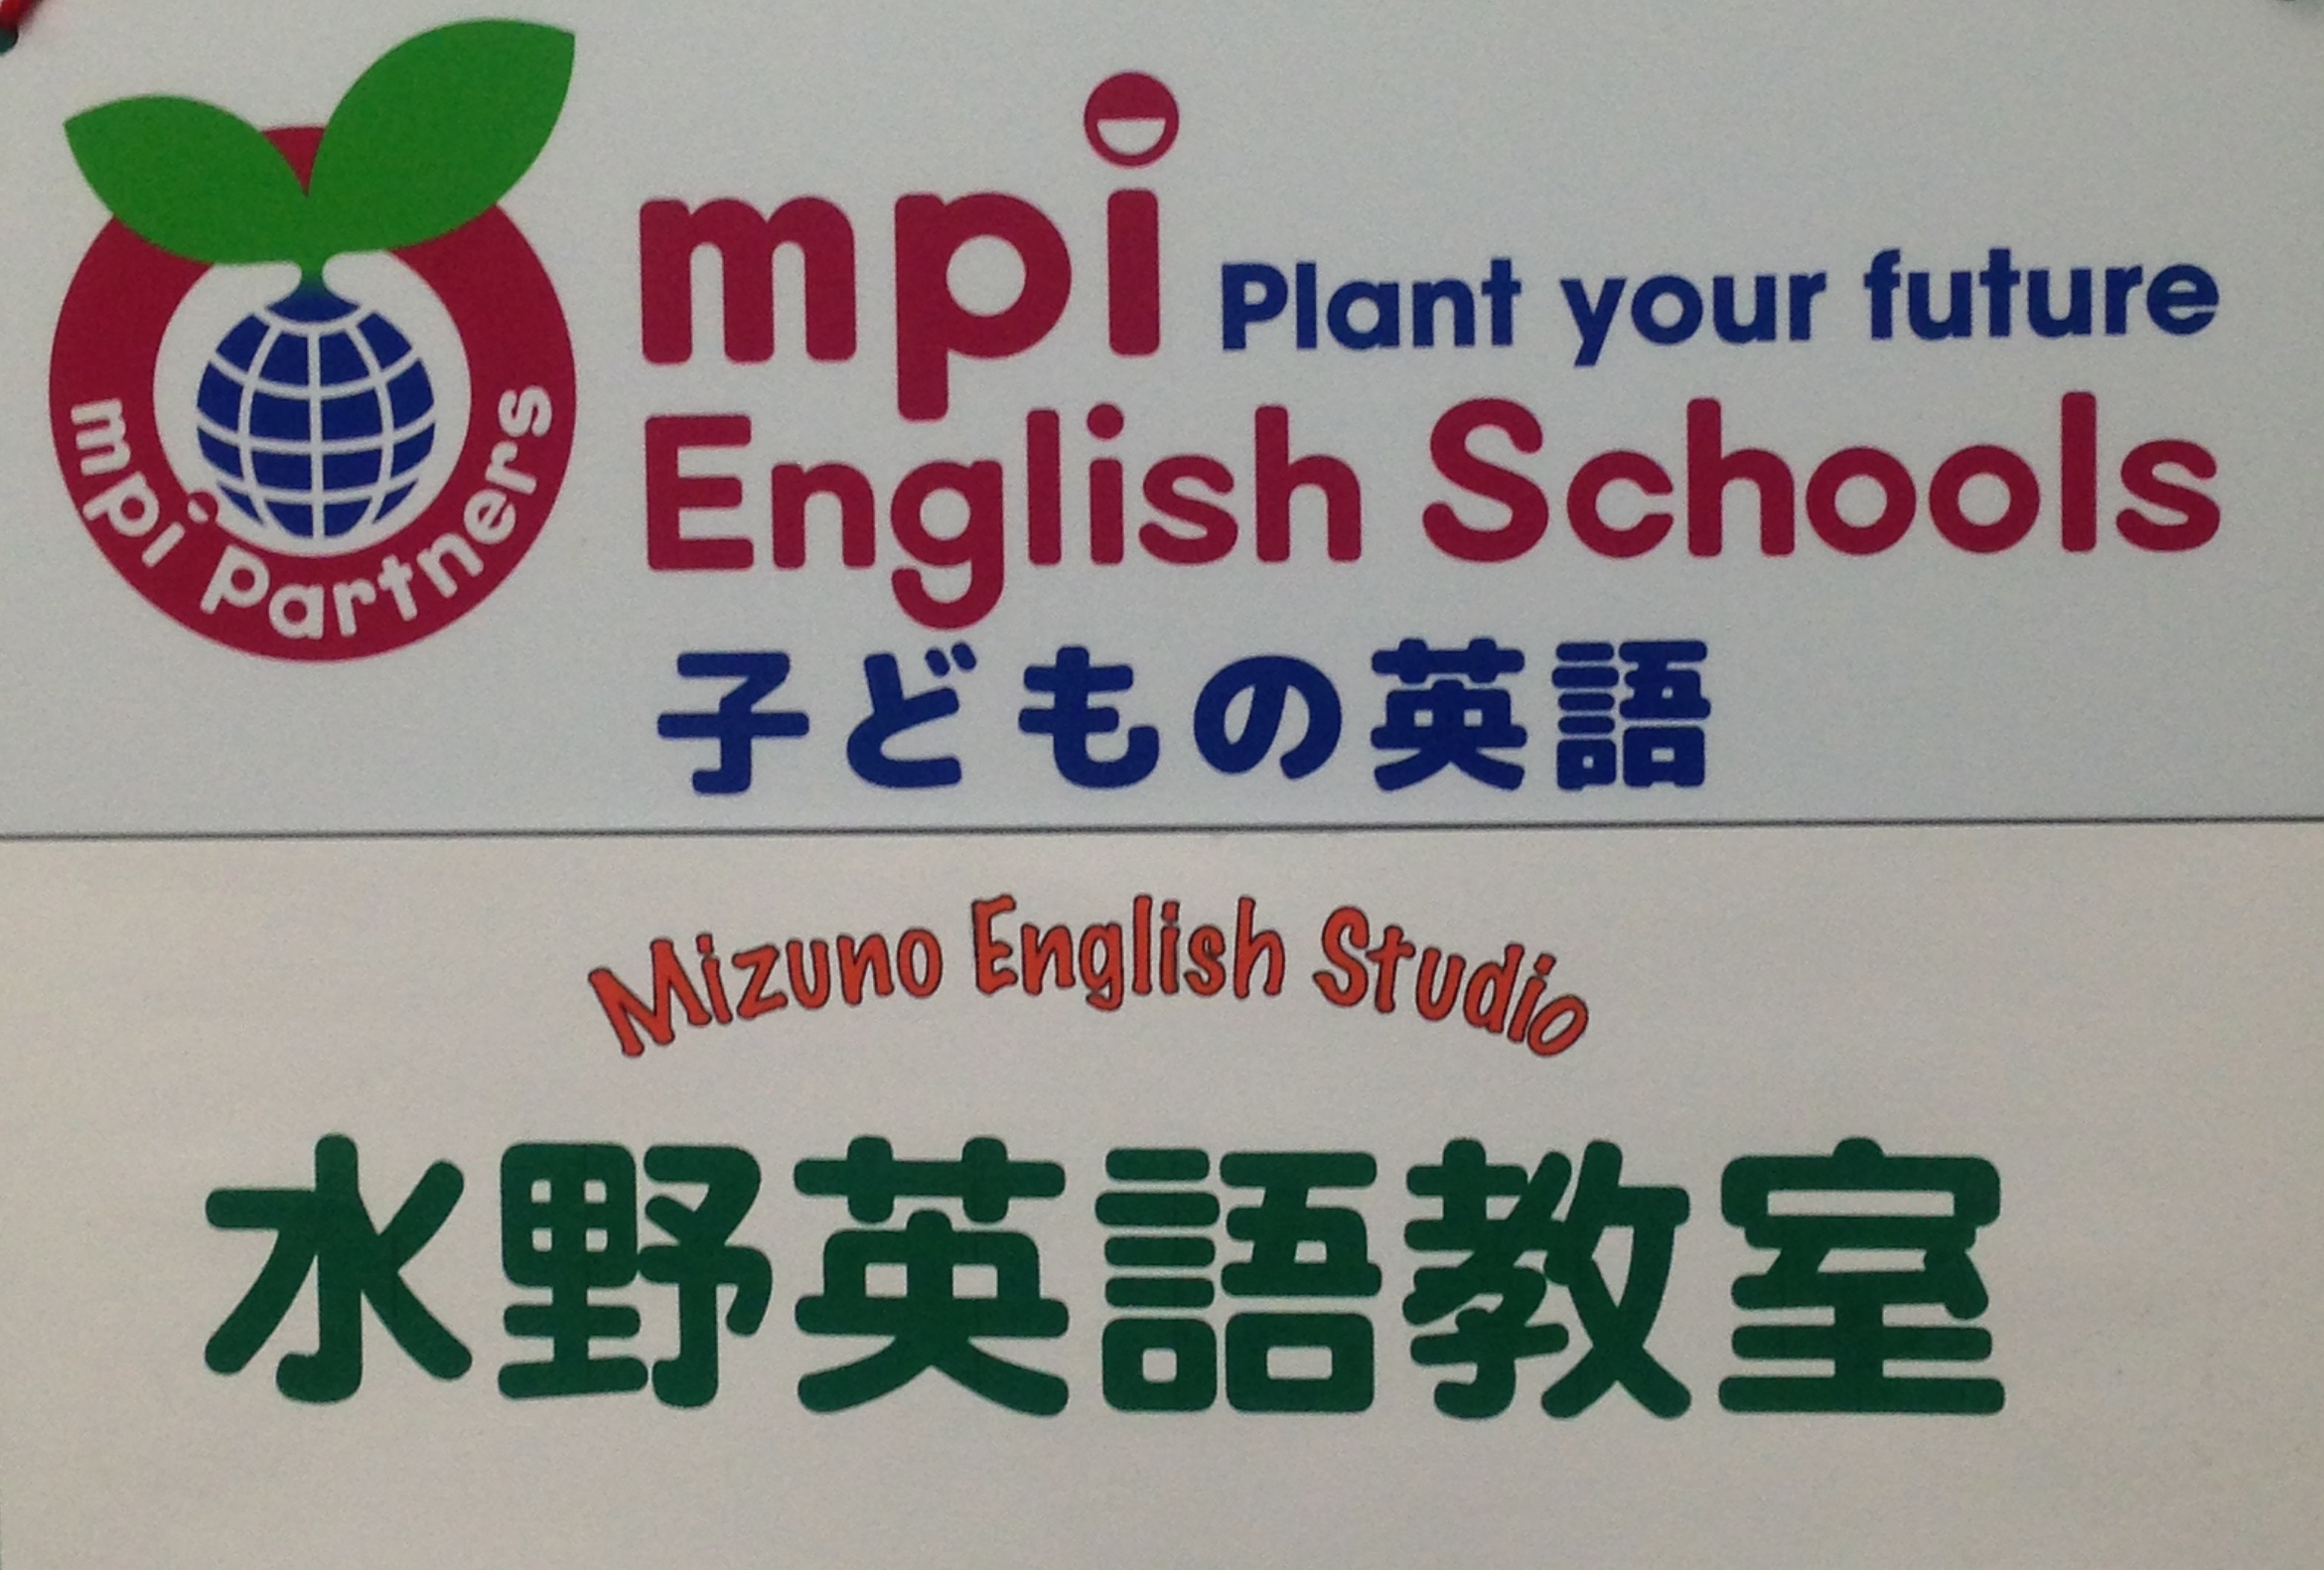 Mizuno English Studio